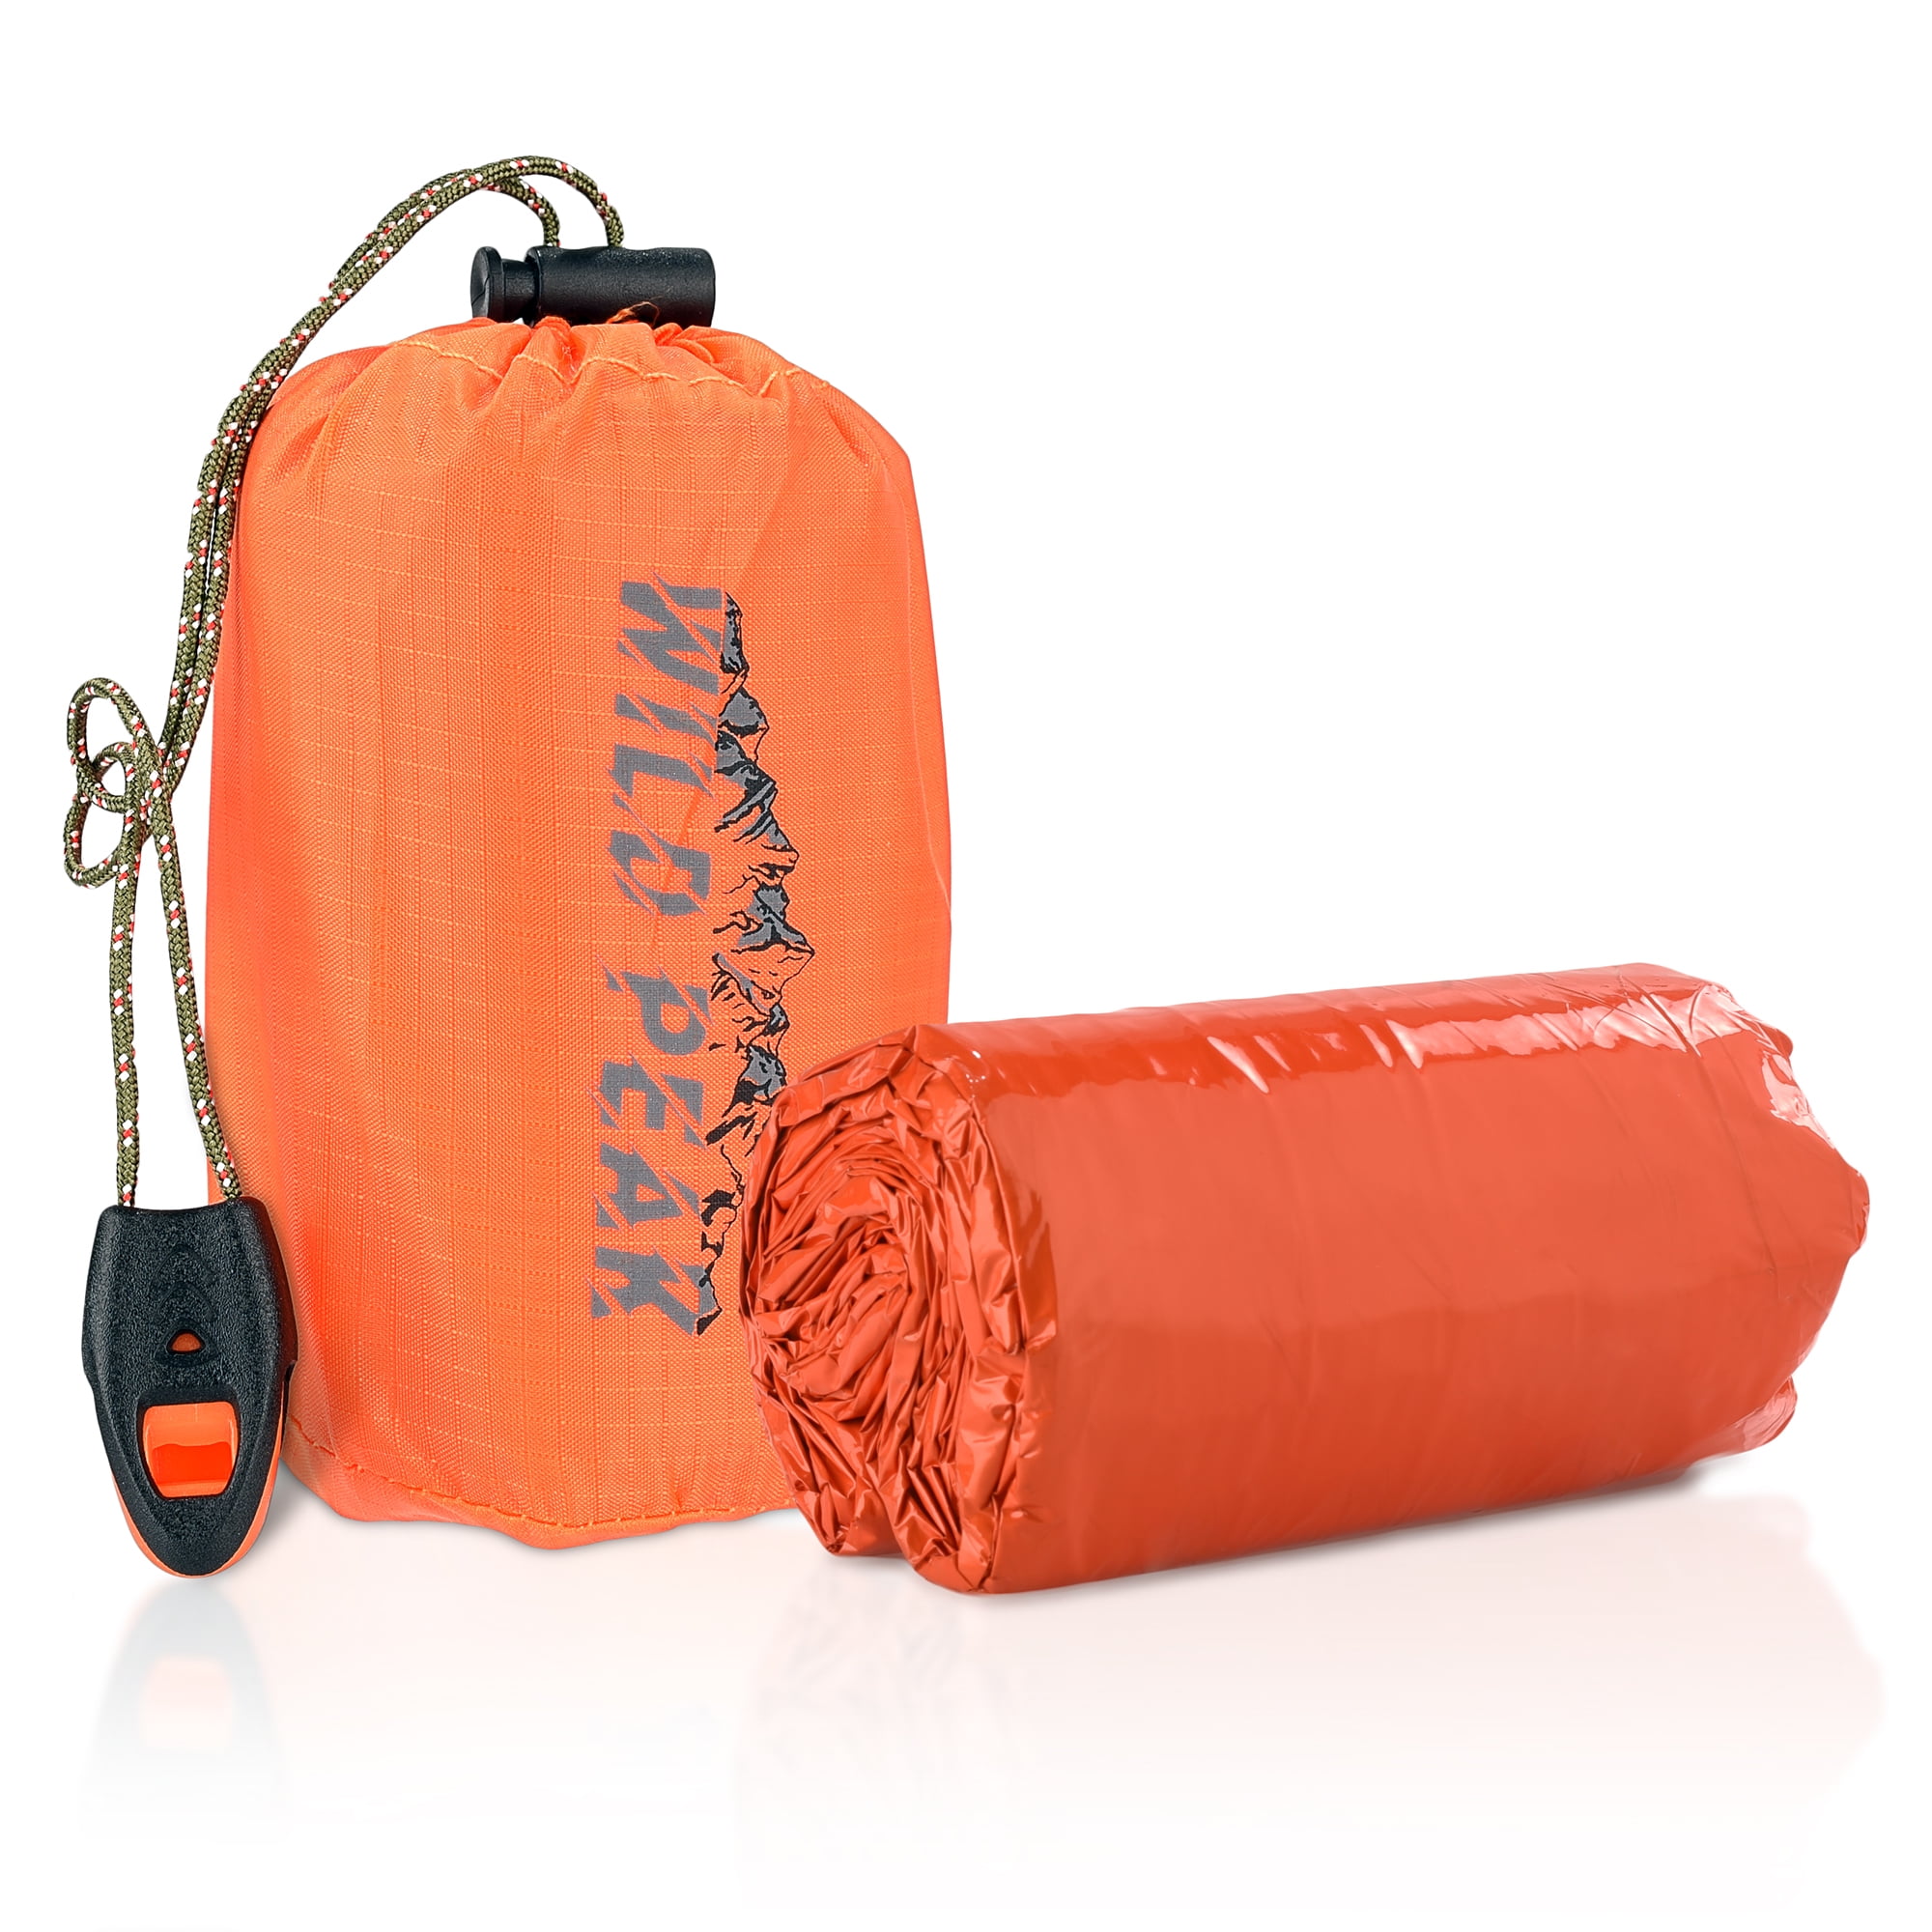 Heavy Duty Mylar Emergency Sleeping Bag Reflects Body Heat Tear Resistant Case 